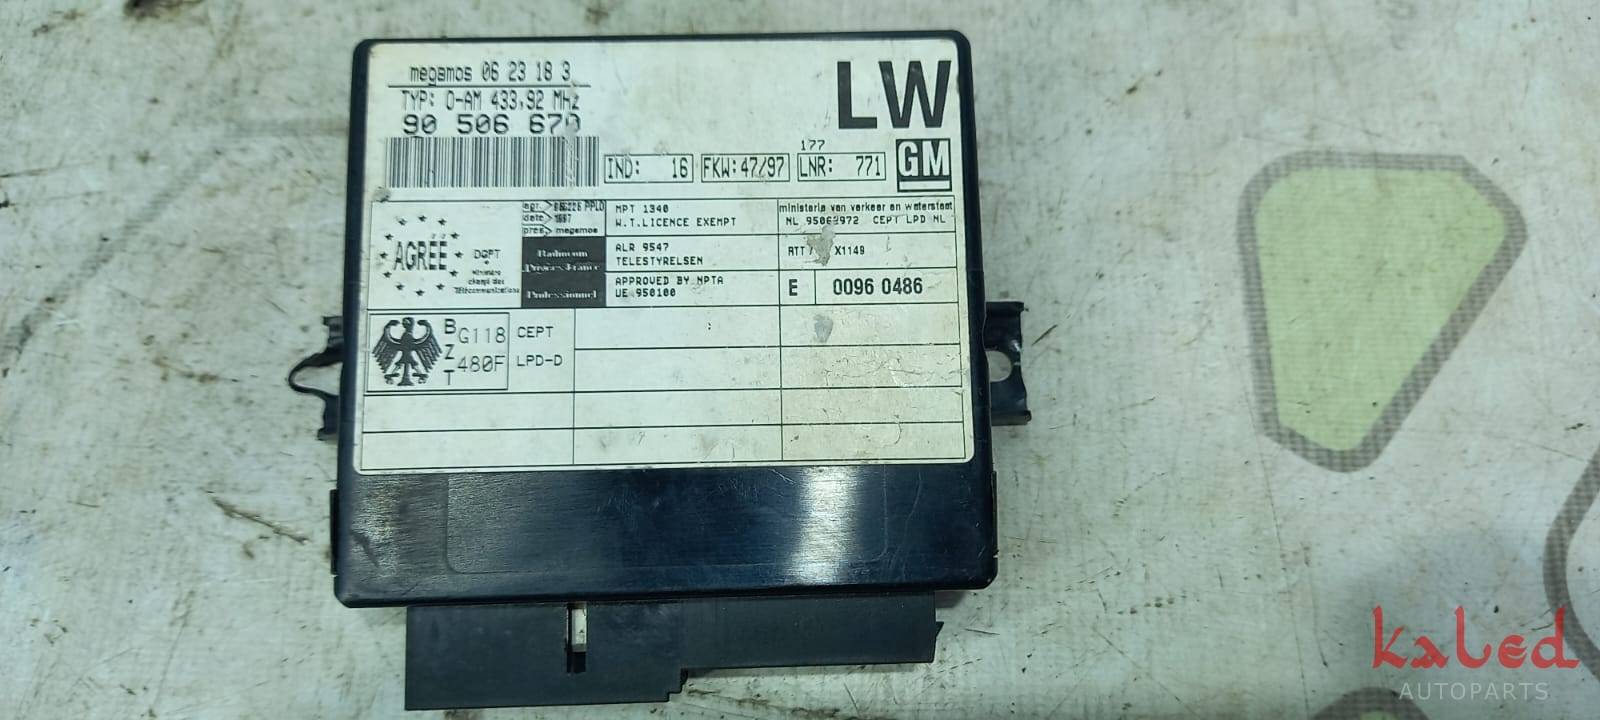 Módulo Central Alarme Gm Vectra 97-99 - Kaled Auto Parts